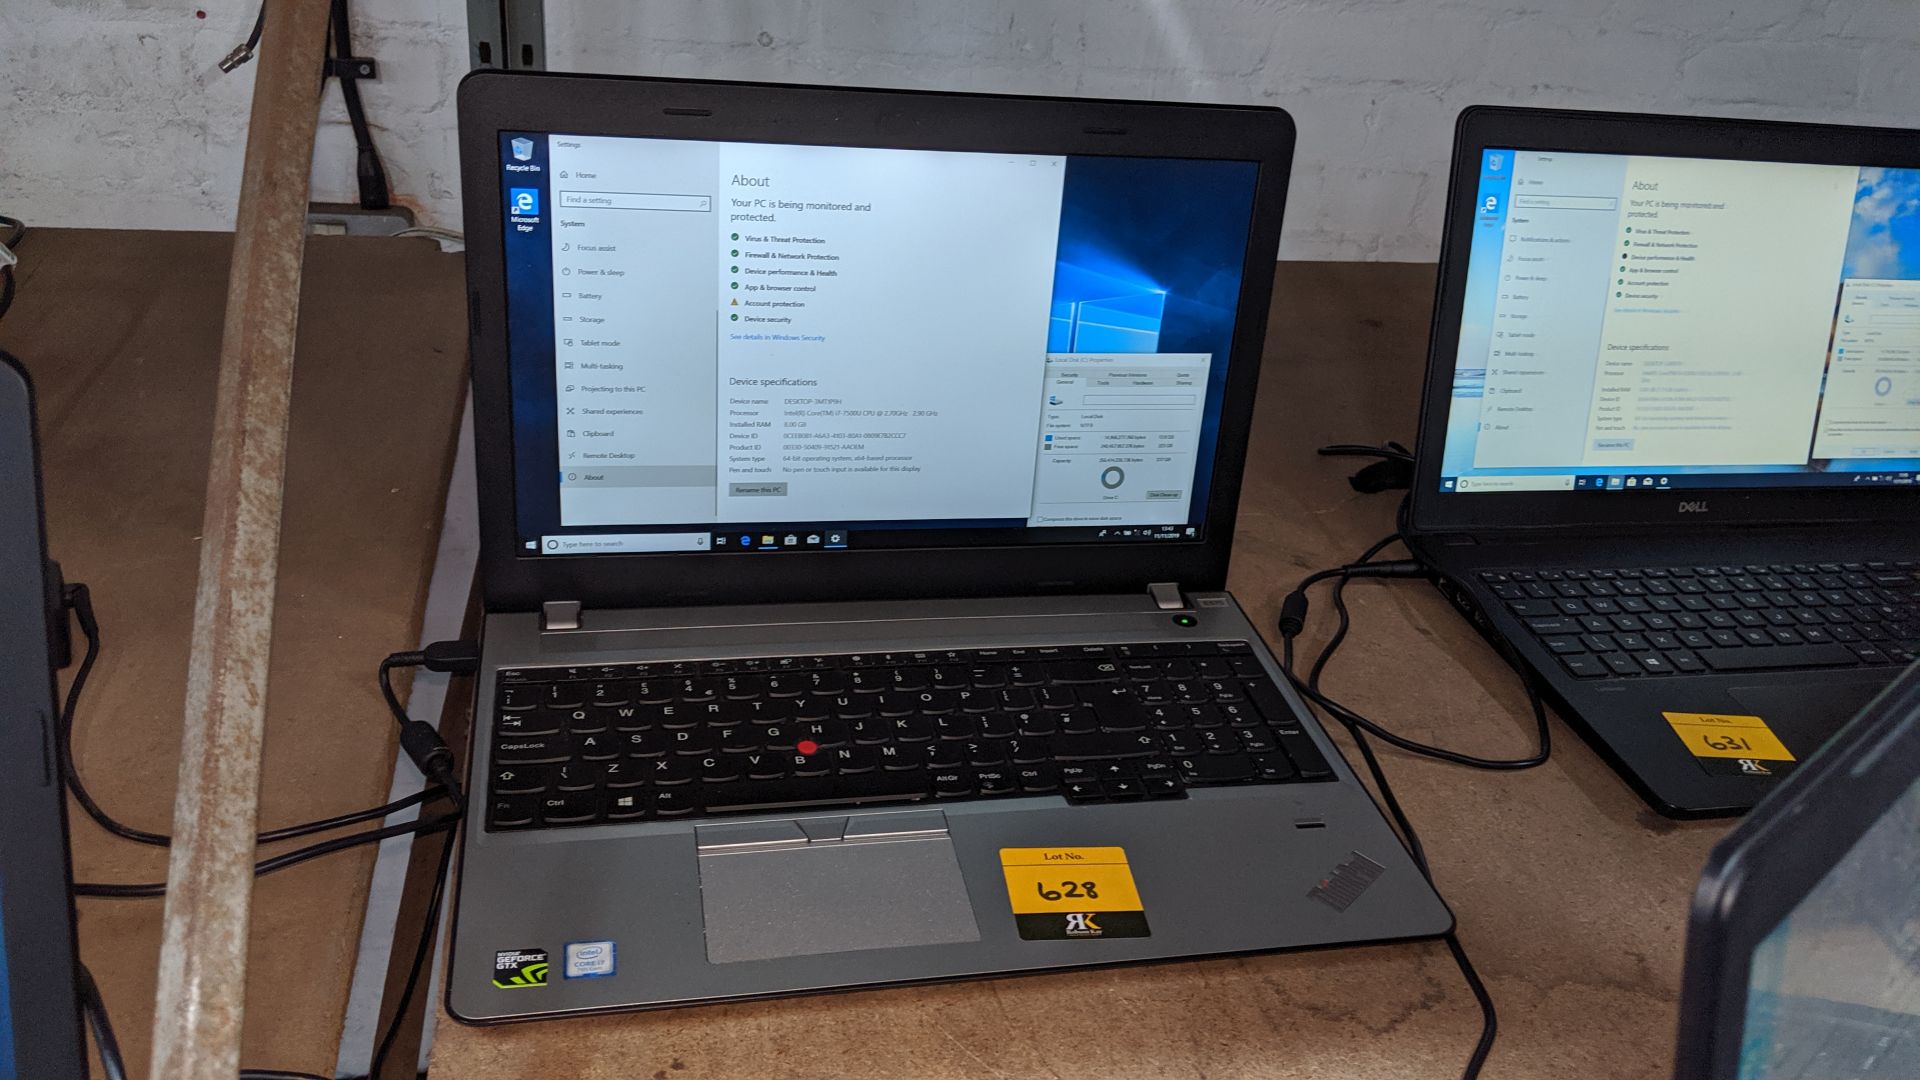 Lenovo ThinkPad notebook computer, Intel Core i7-7500u CPU @ 2.7GHz, 8Gb RAM, 256Gb SSD including